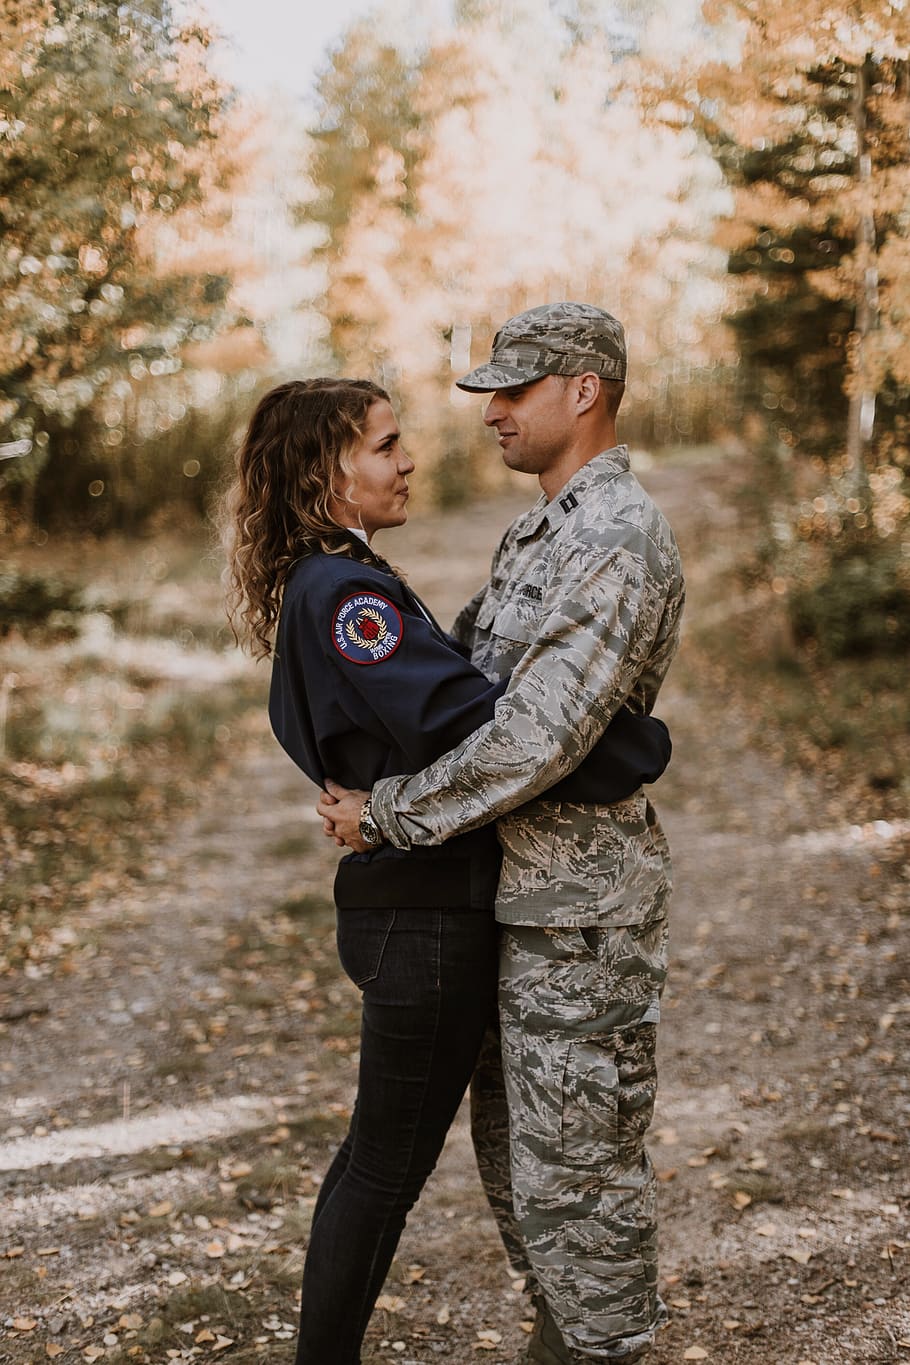 HD wallpaper: Woman Hugging Man In Service Uniform, army, couple